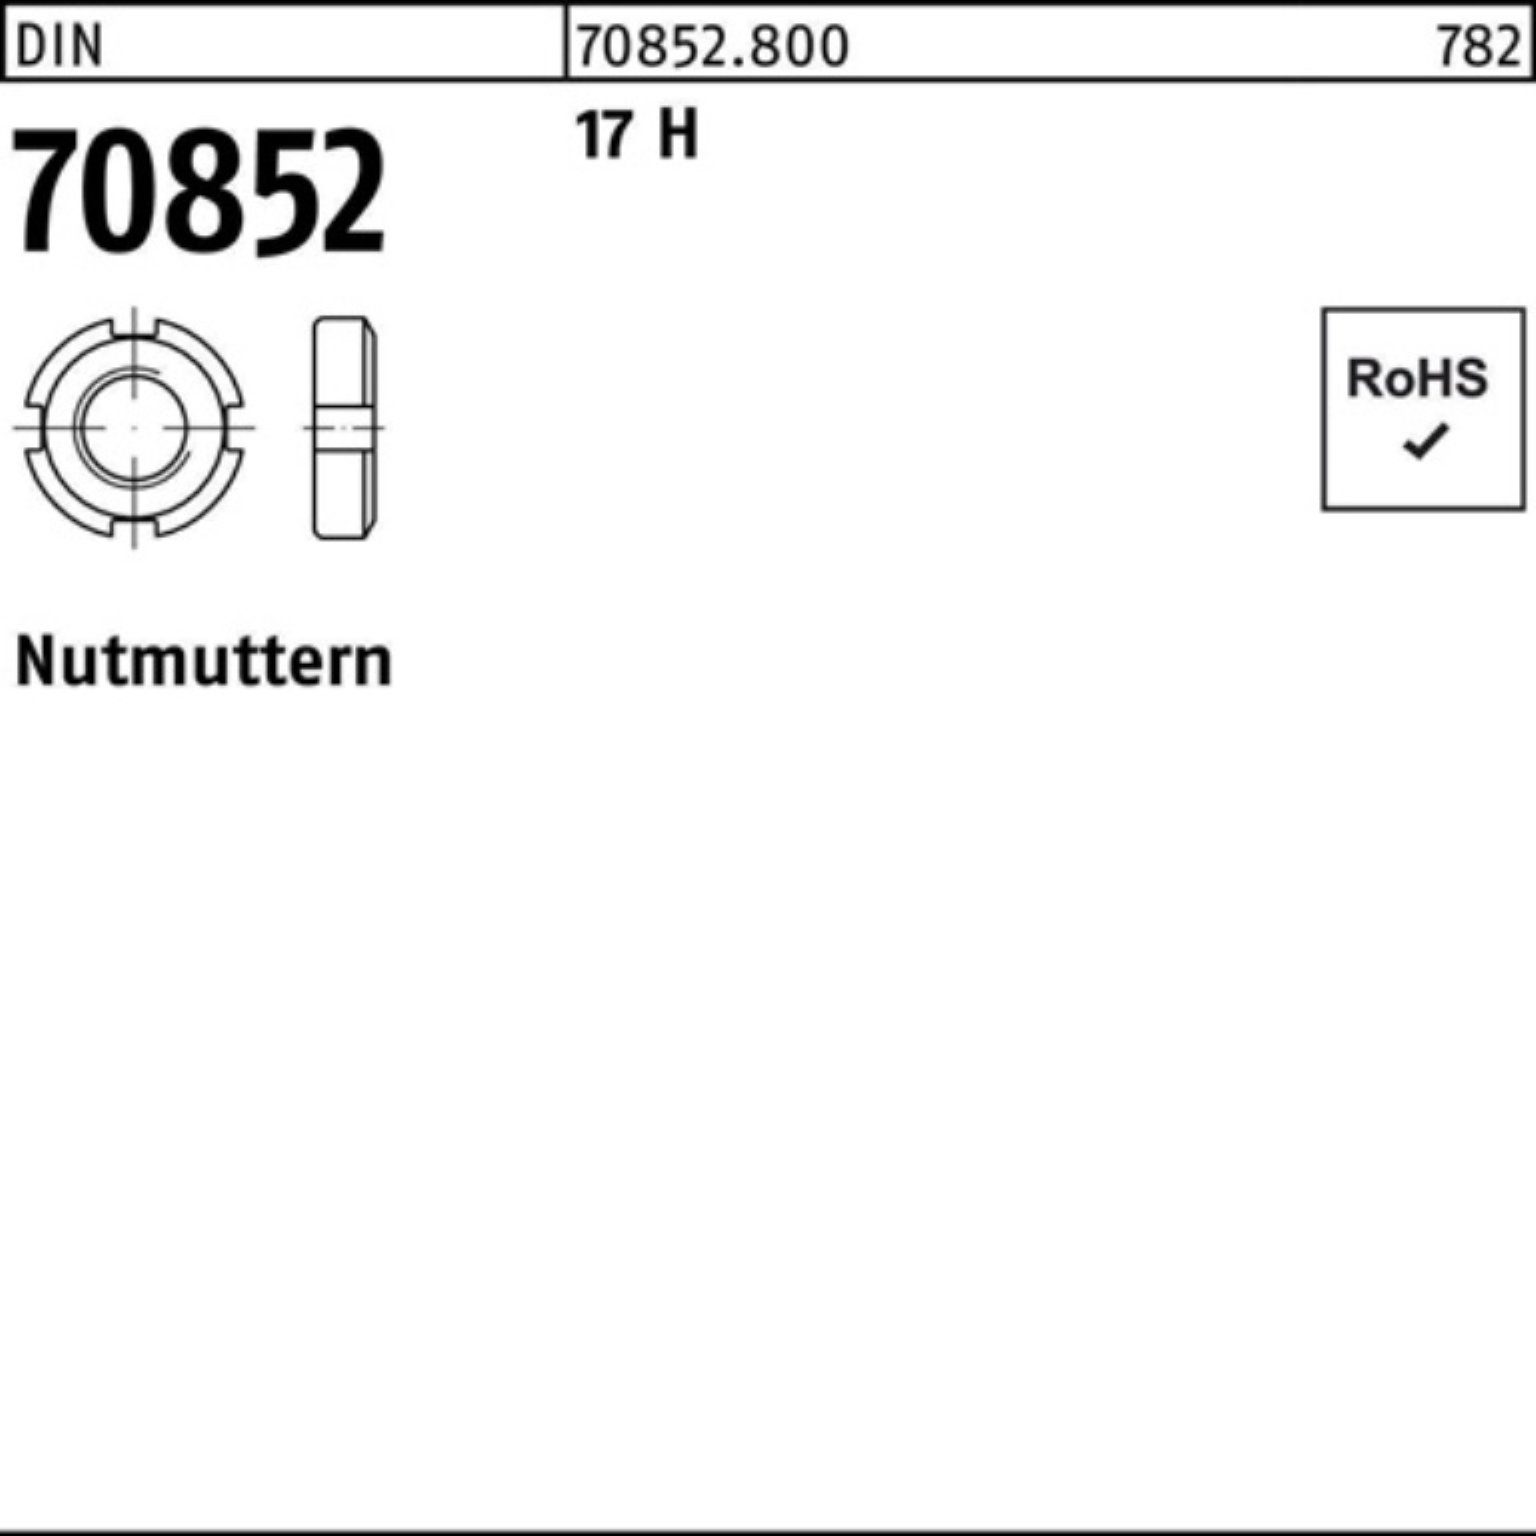 Reyher Nutmutter 100er Pack Nutmutter DIN 70852 M12x 1,5 17 H 25 Stück DIN 70852 17 H